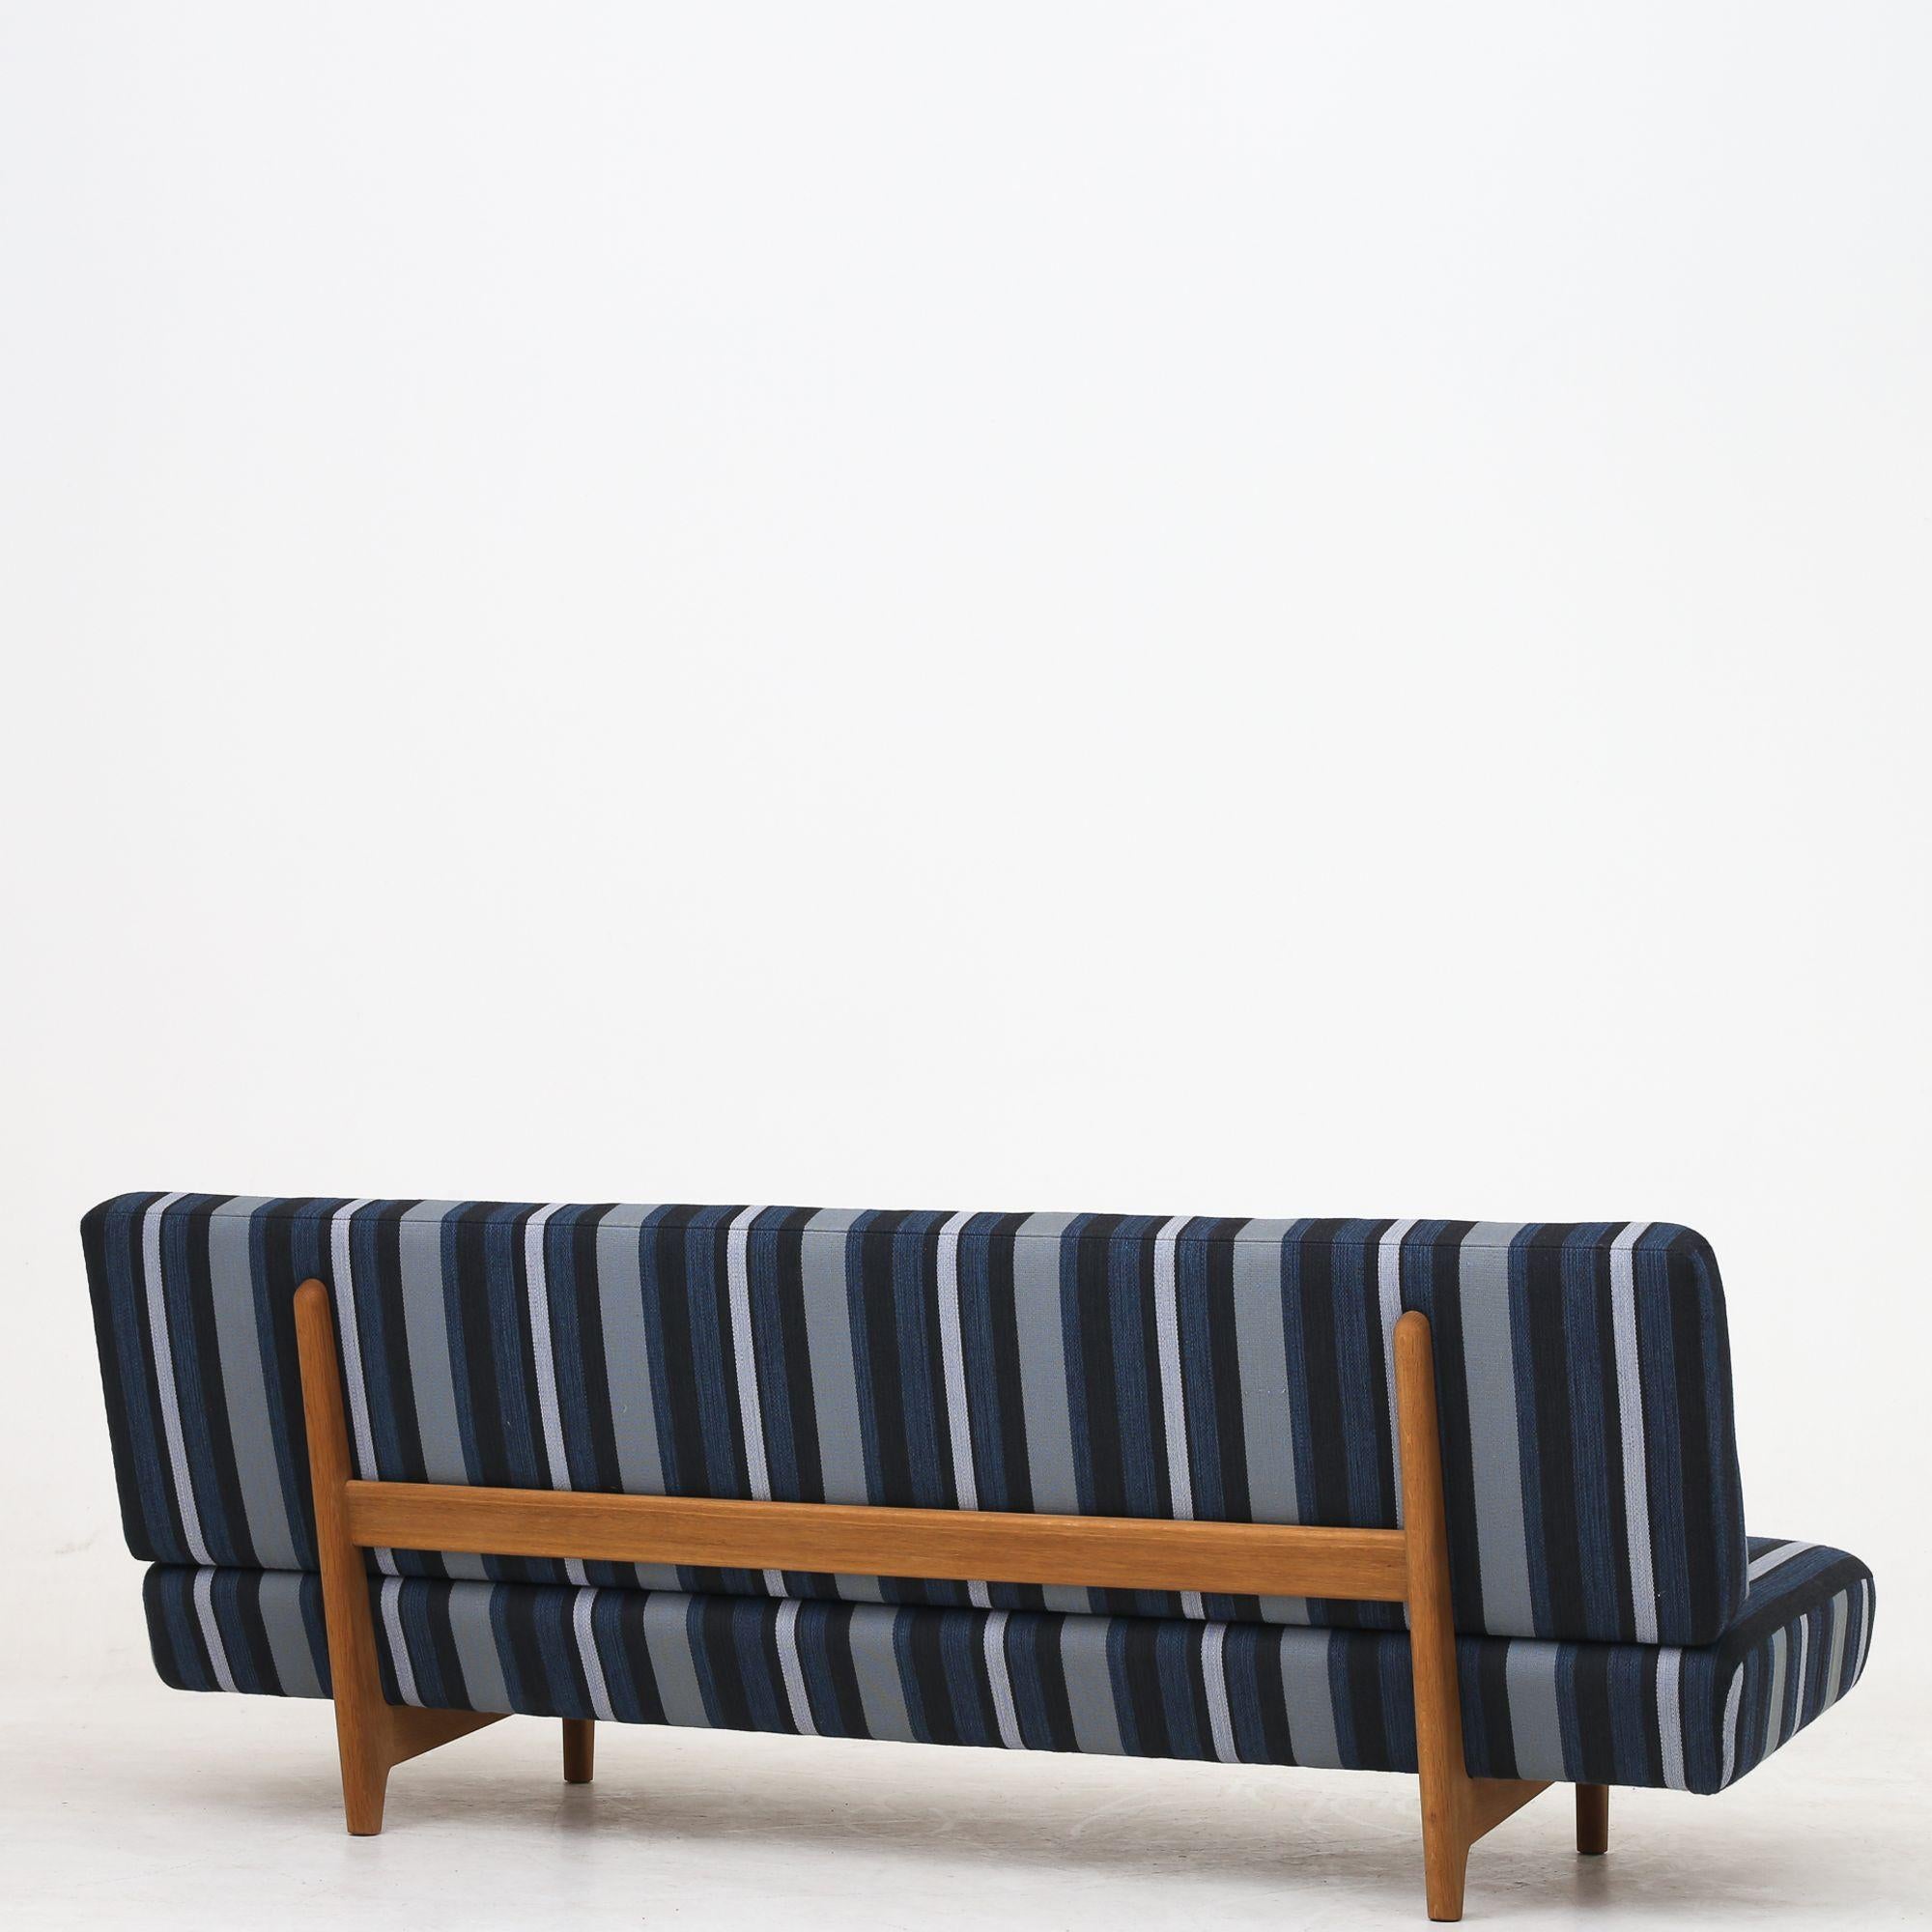 Rare sofa with patinated oak legs, newly upholstered in textile (DAW, color Stripe 7) Hans J. Wegner / Johannes Hansen.